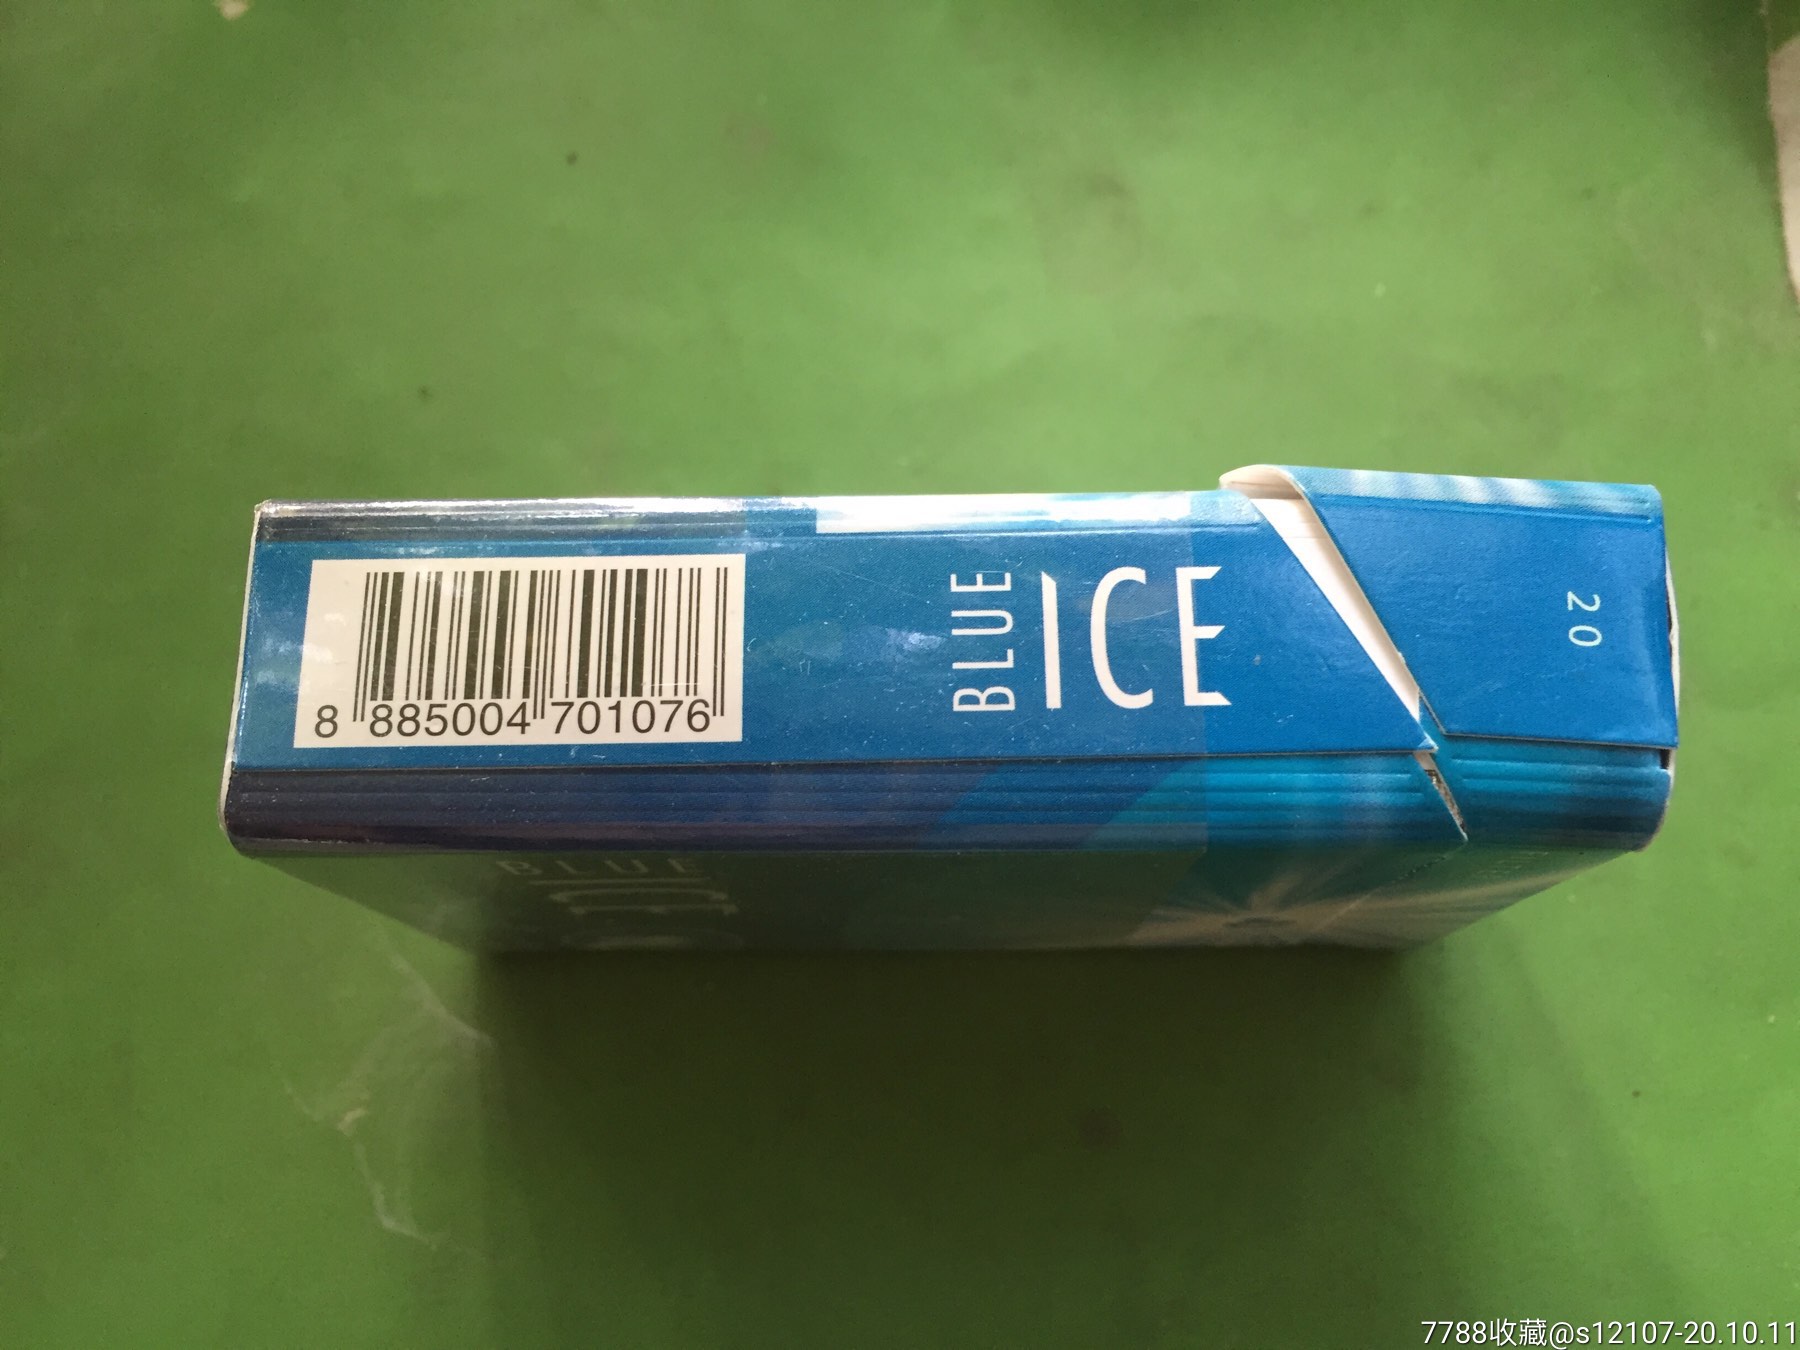 blueiceblast日本冰蓝爆珠空烟盒内带烟卡纸一张合售